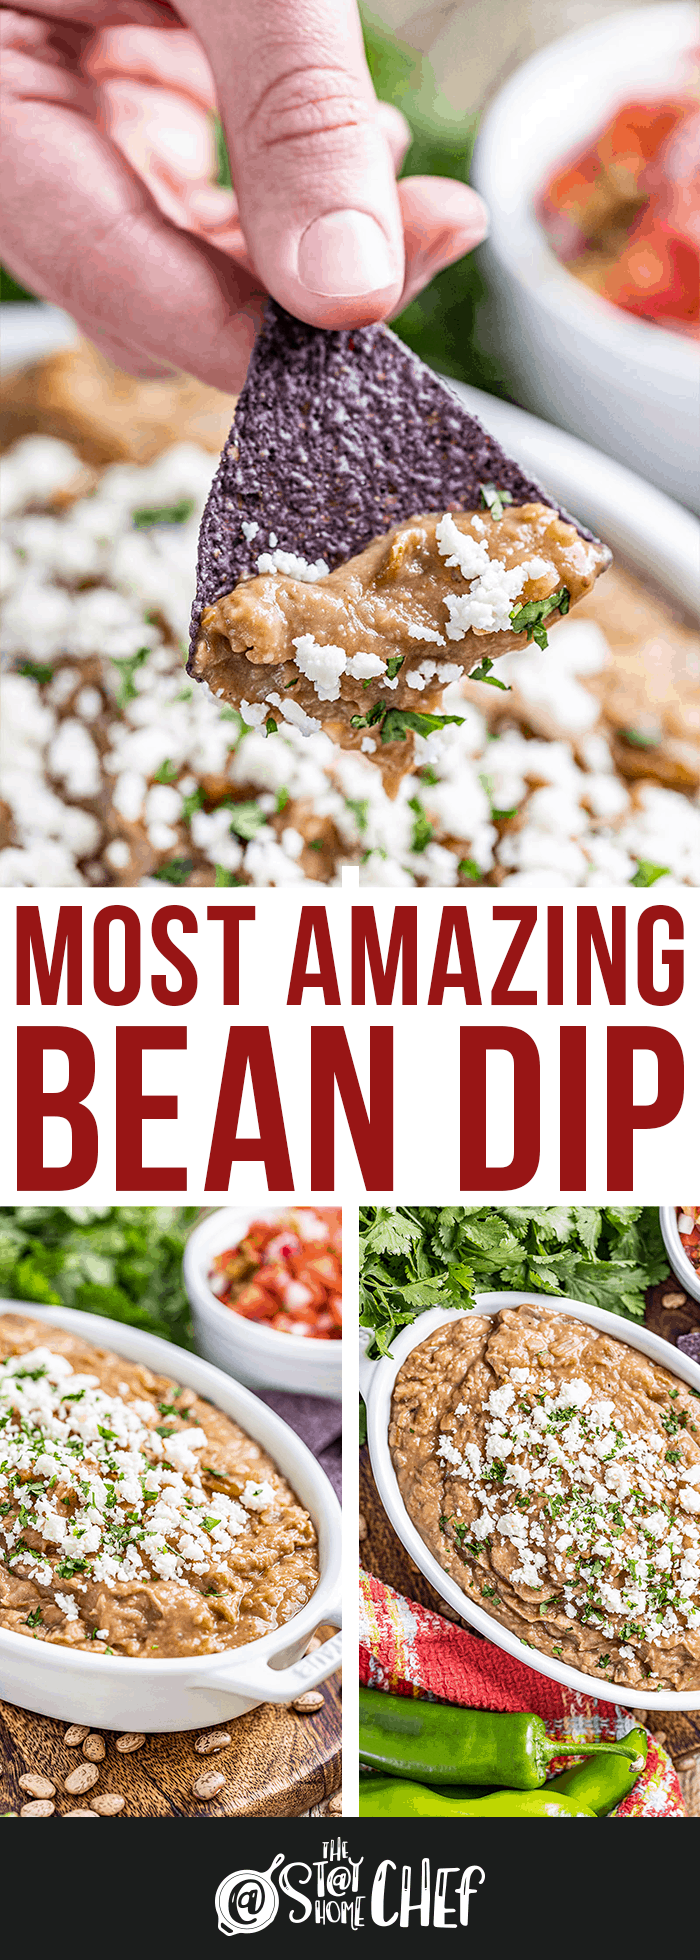 Most Amazing Bean Dip